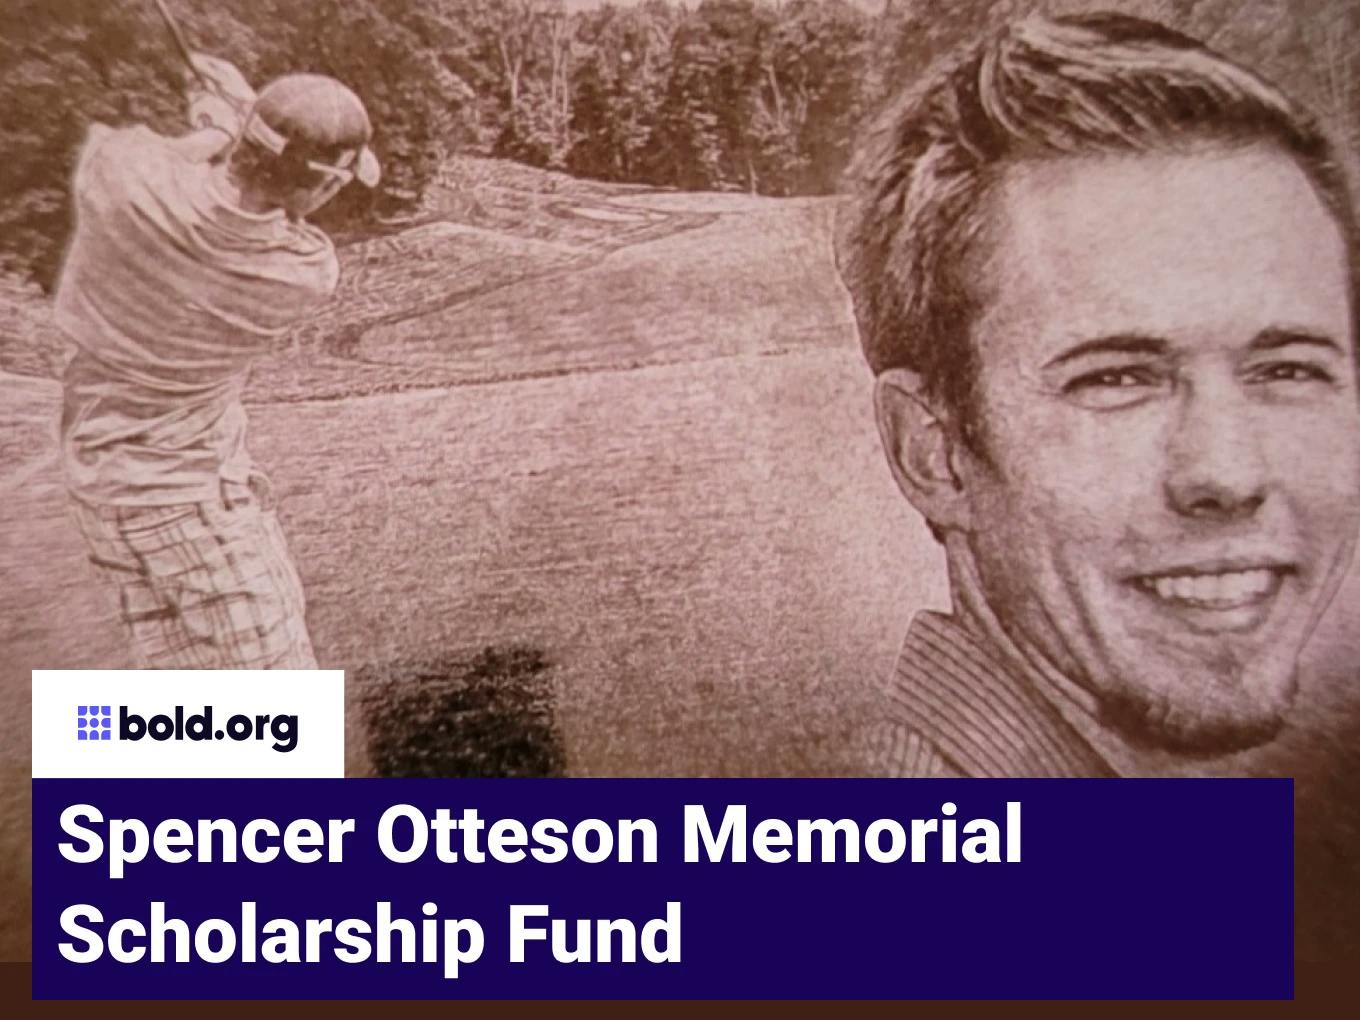 Spencer Otteson Memorial Scholarship Fund